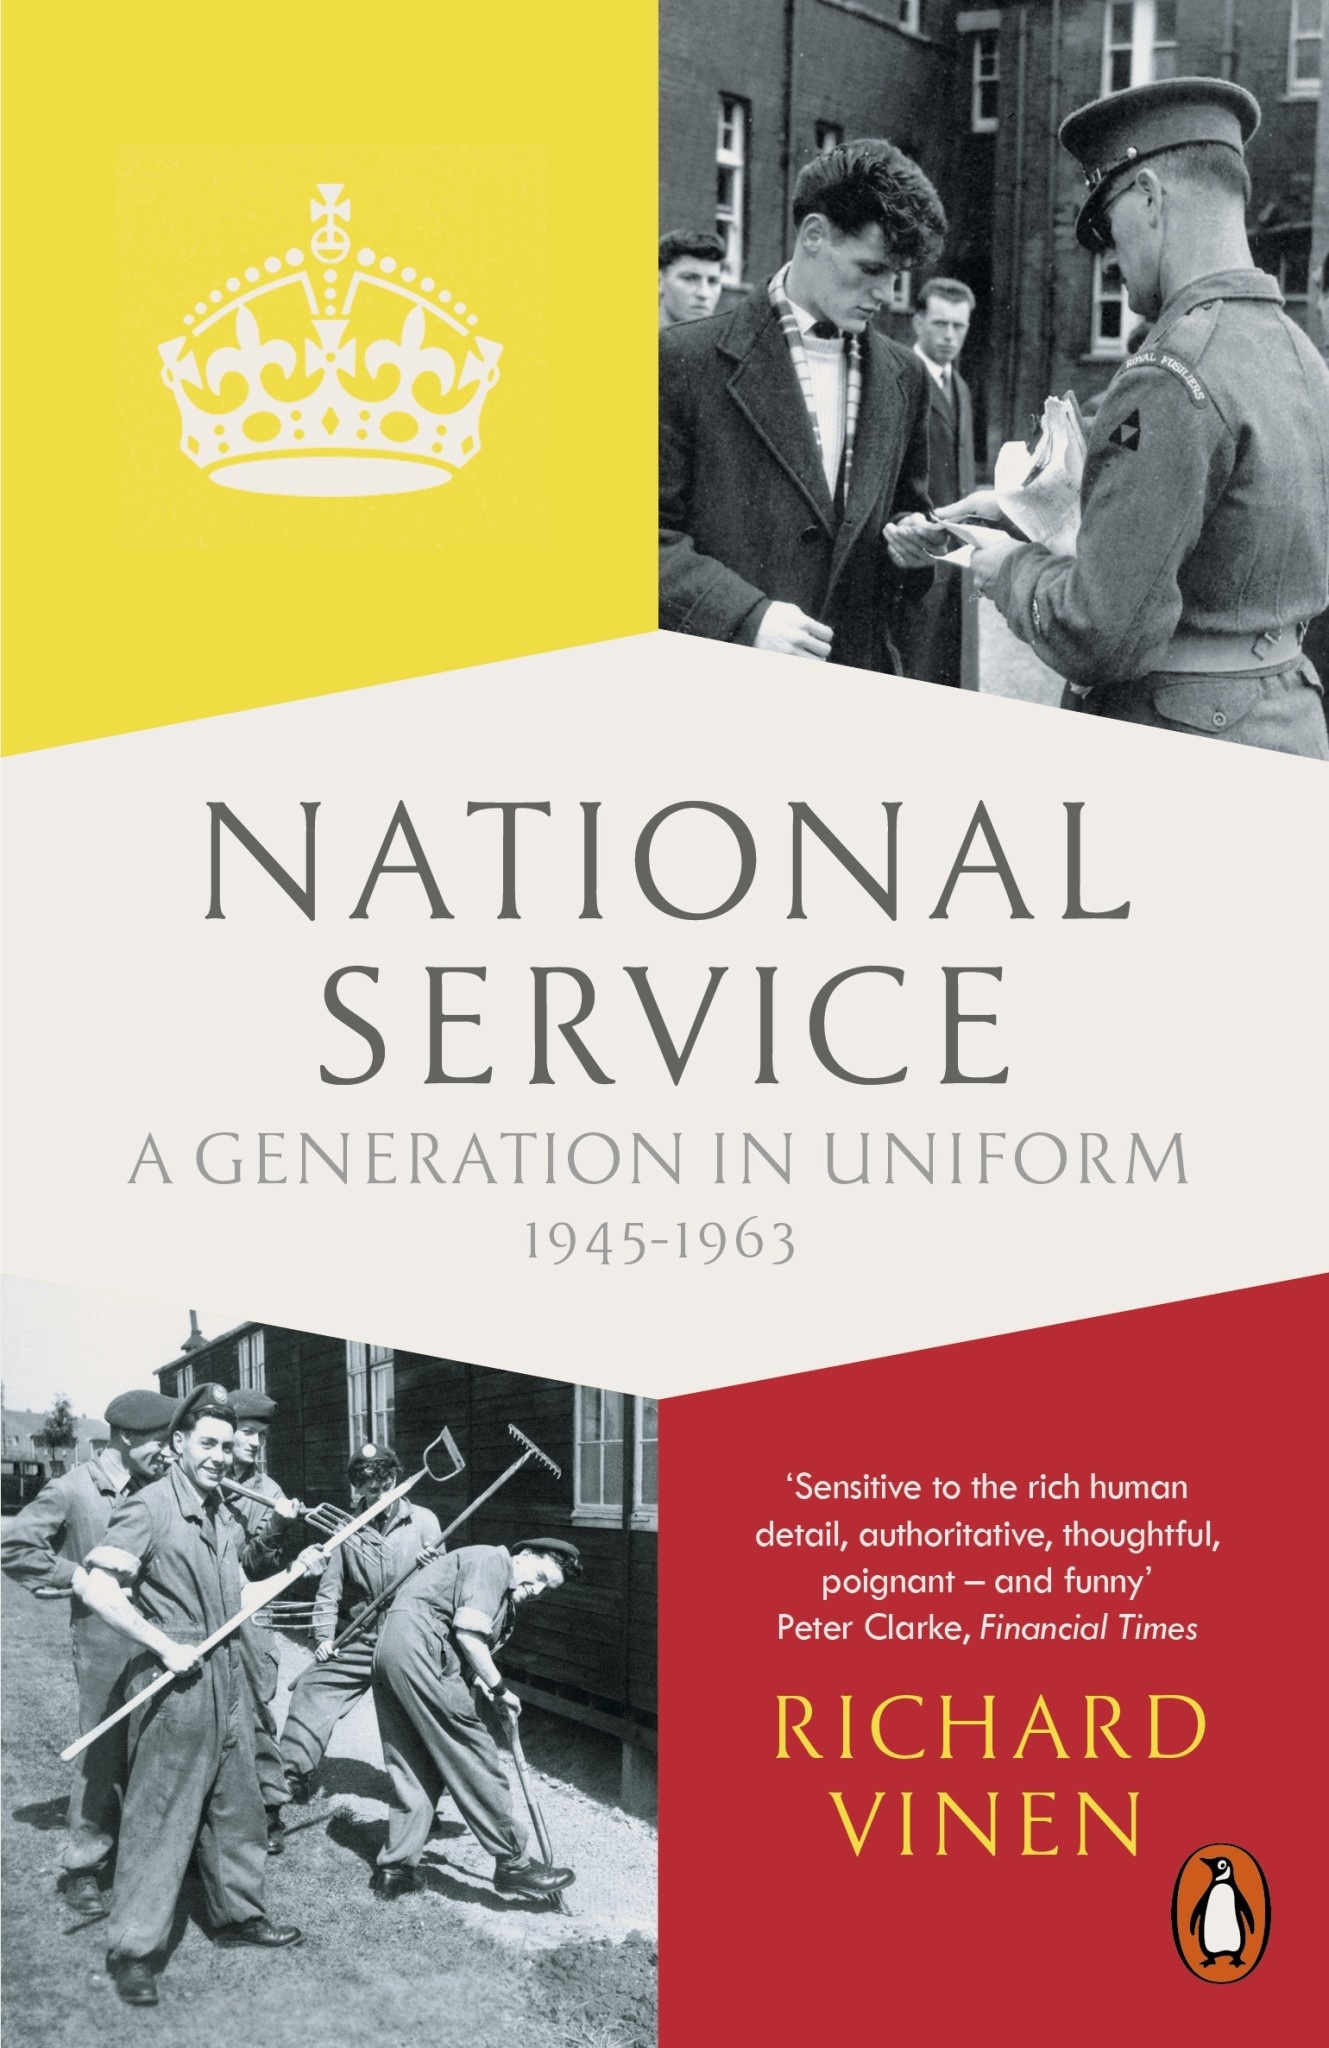 National Service: A Generation in Uniform 1945-1963 Author Richard Vinen